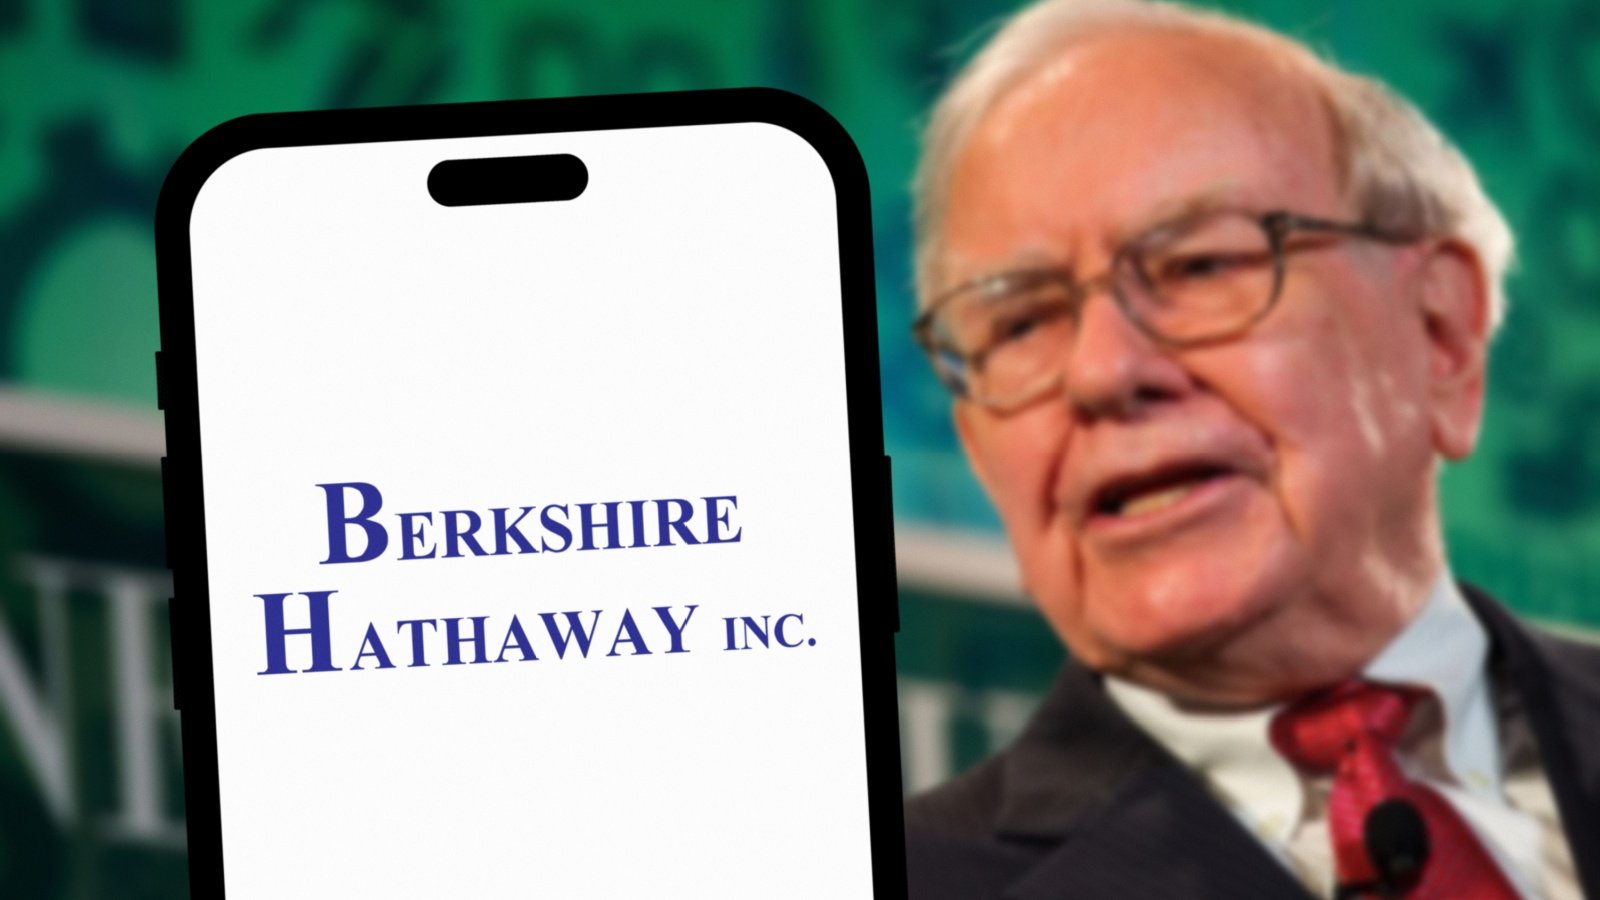 Warren Buffett in the background behind a phone showing the Berkshire Hathaway logo